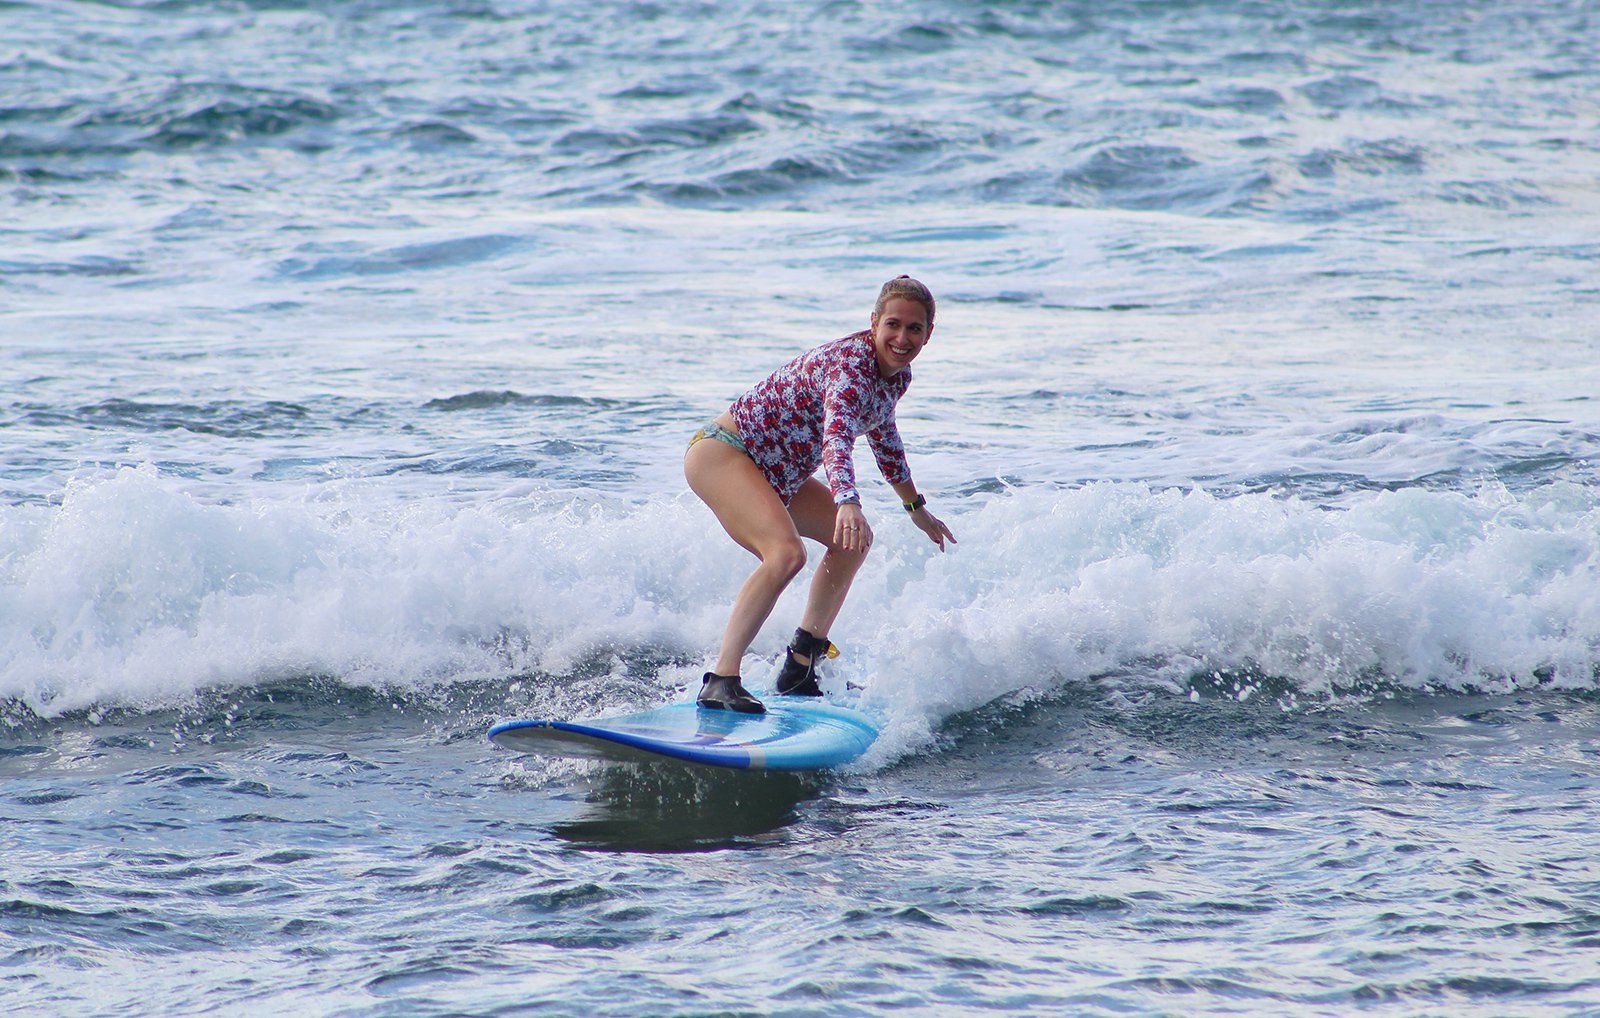 Surfing in Hawaii